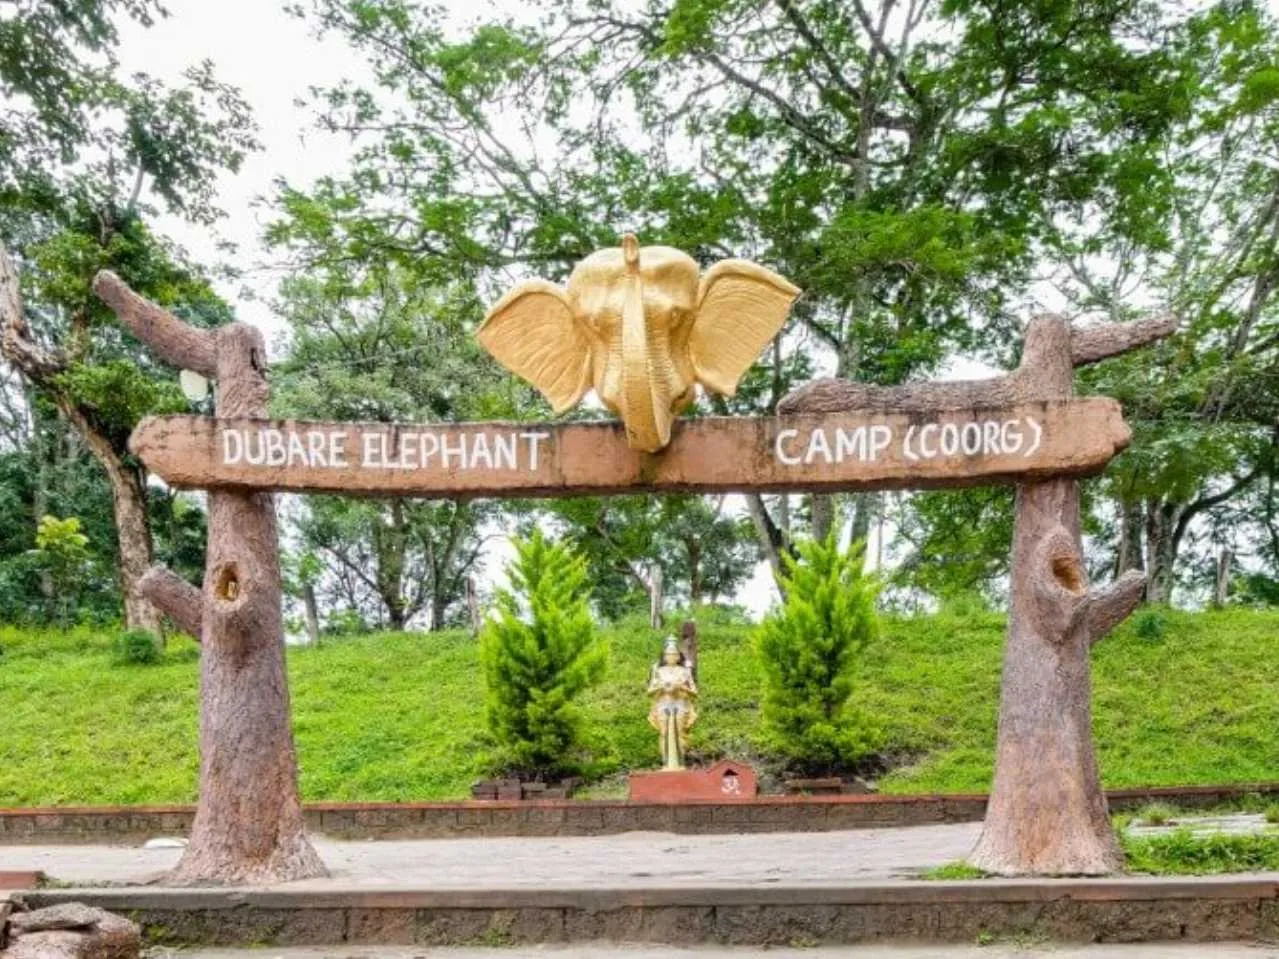 Dobare elephant camp Coorg